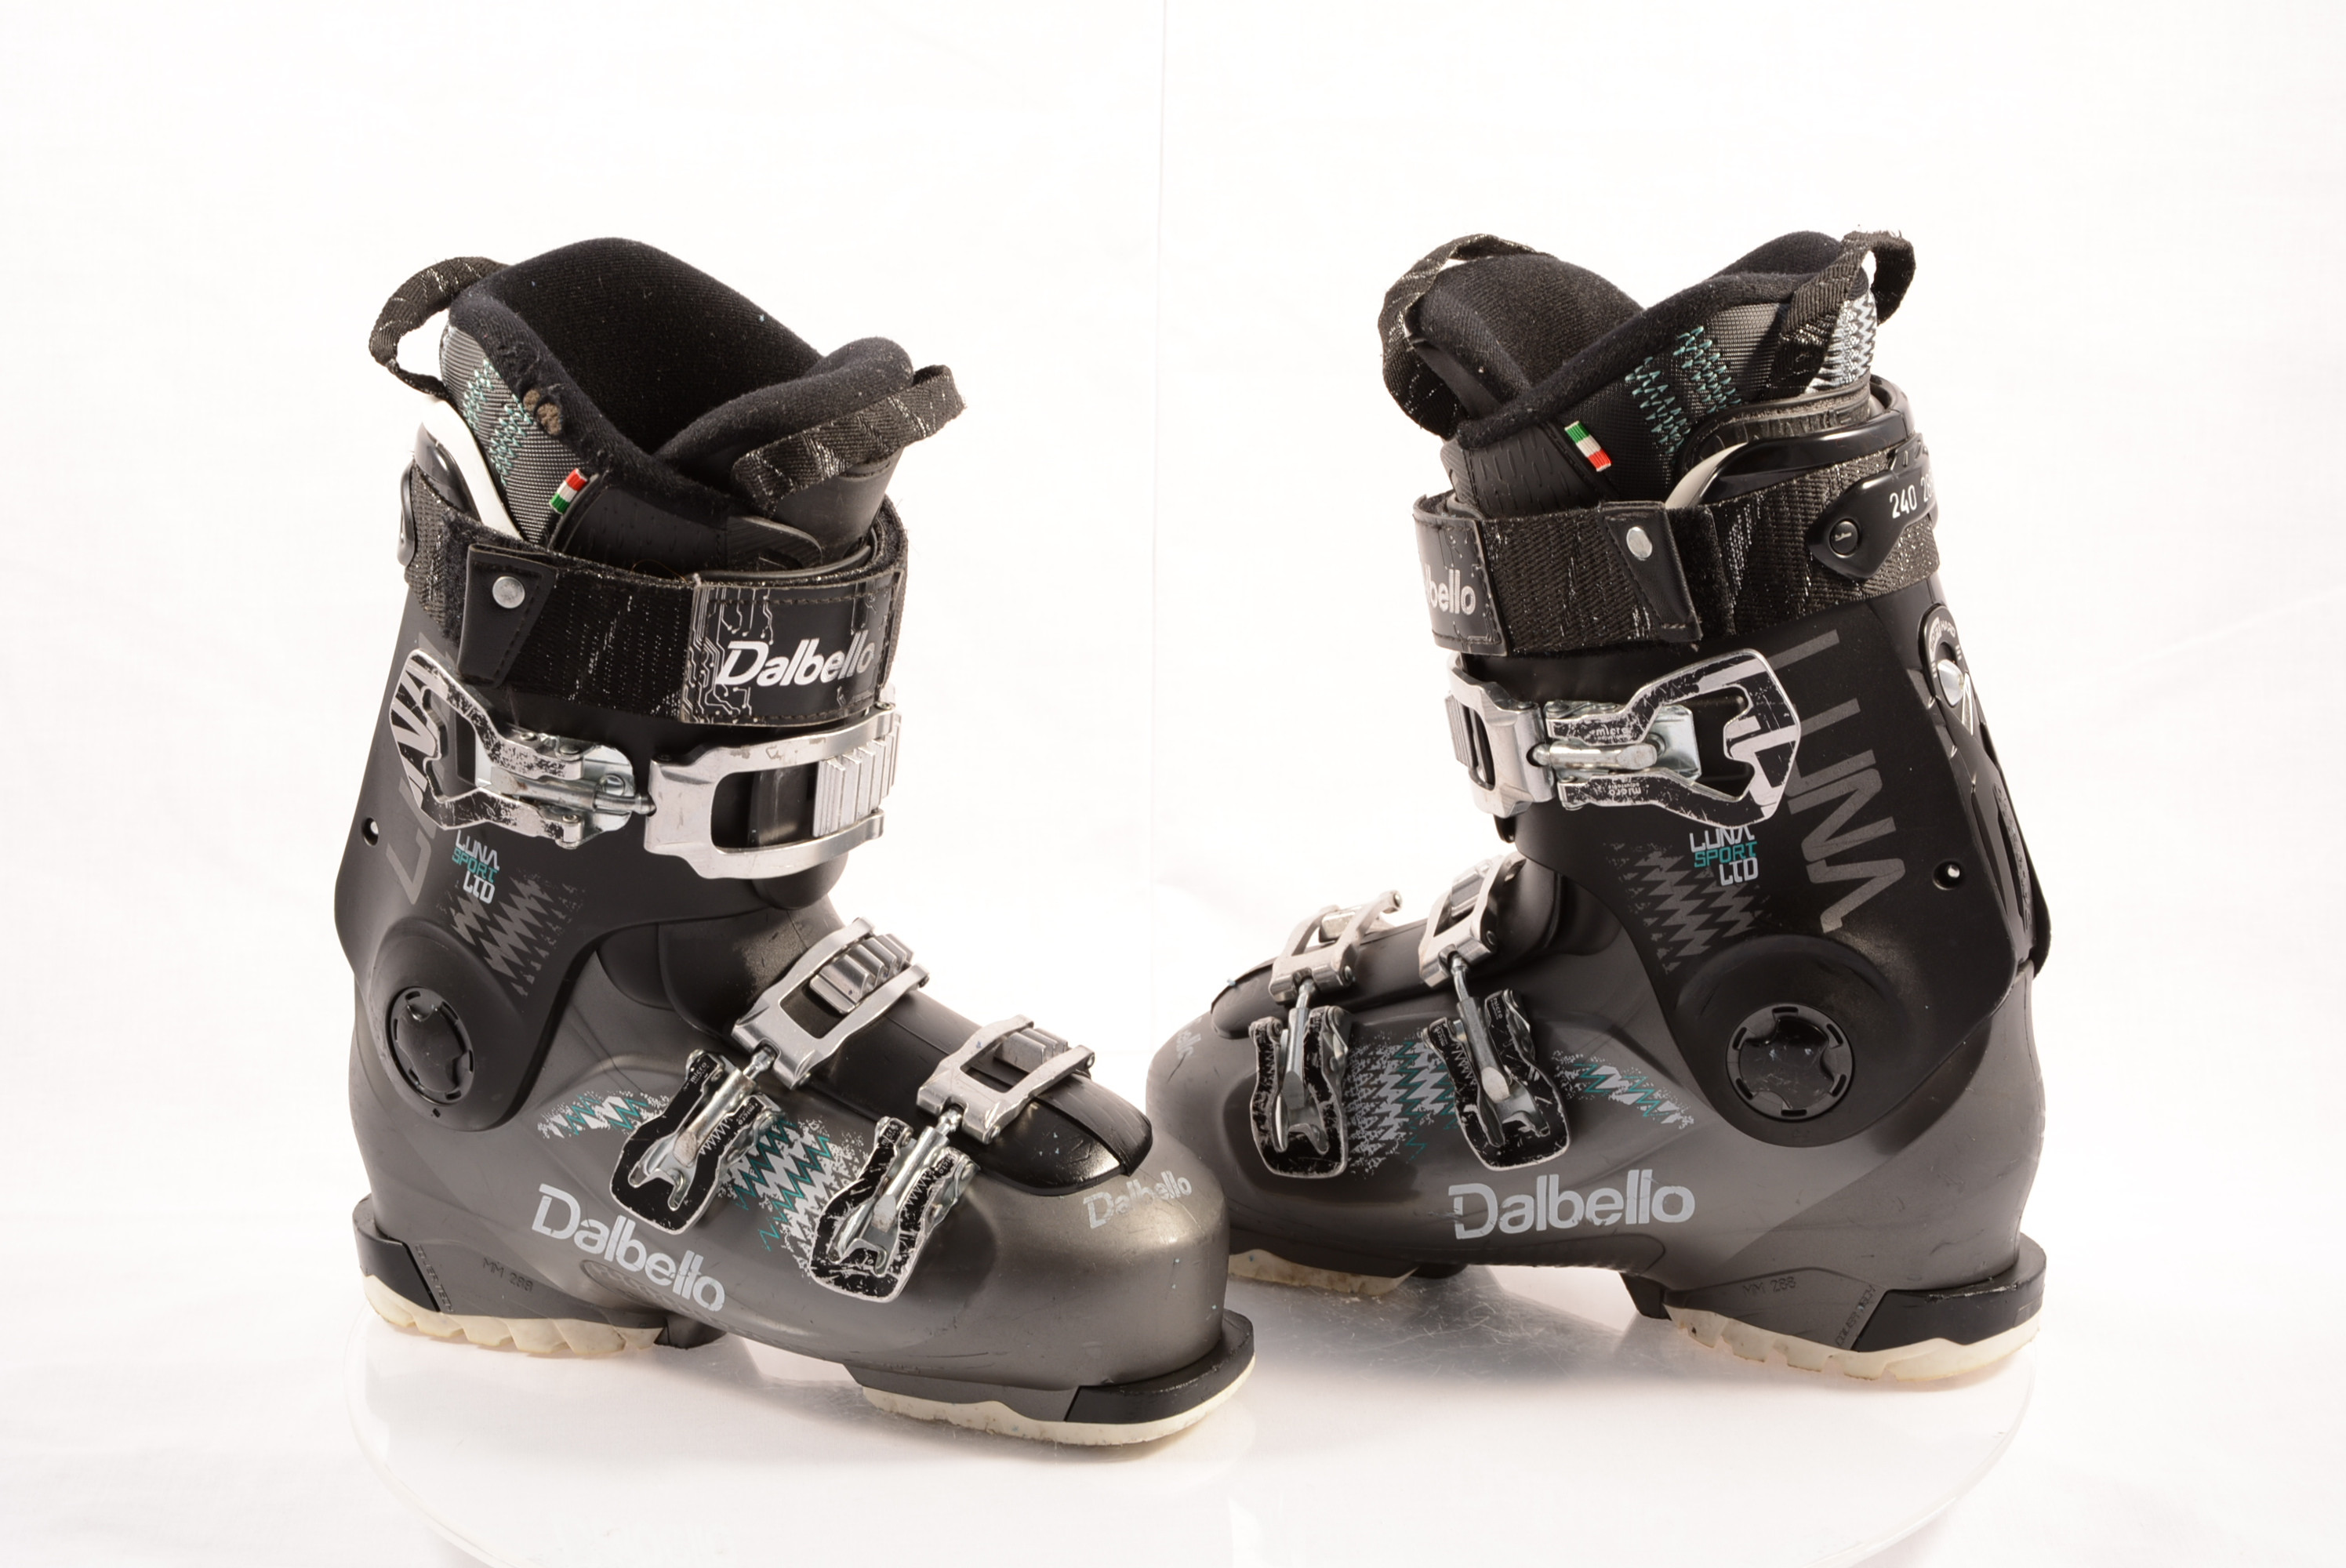 334 mm ski boot size